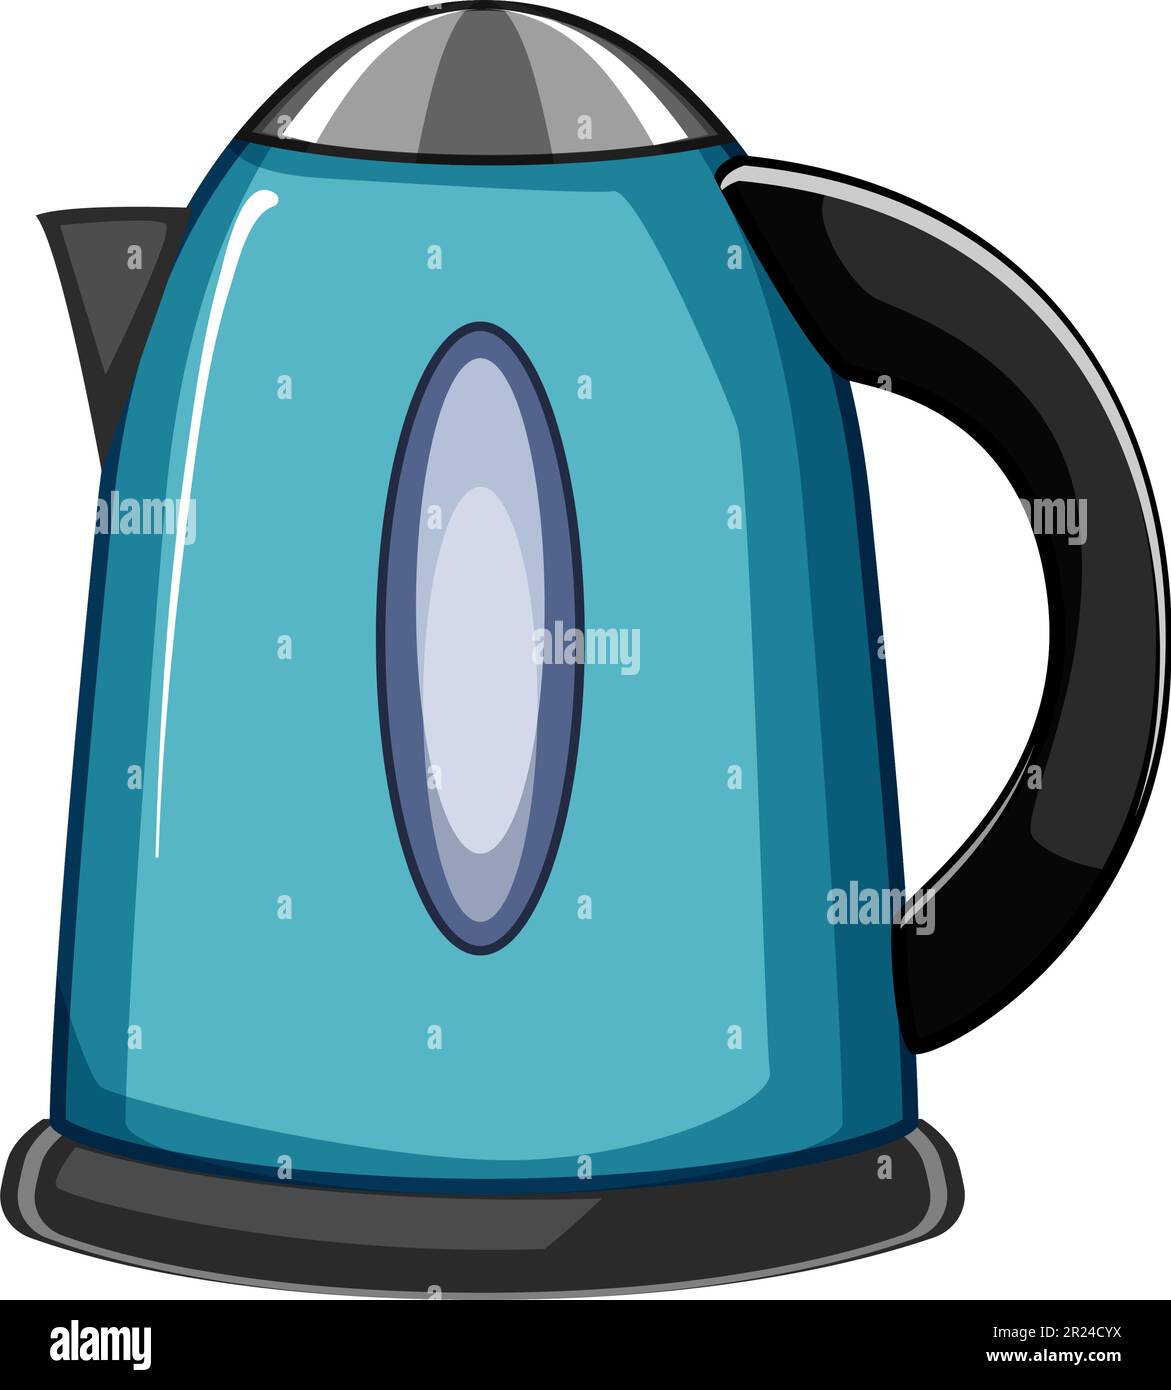 object electric kettle cartoon vector illustration Stock Vector